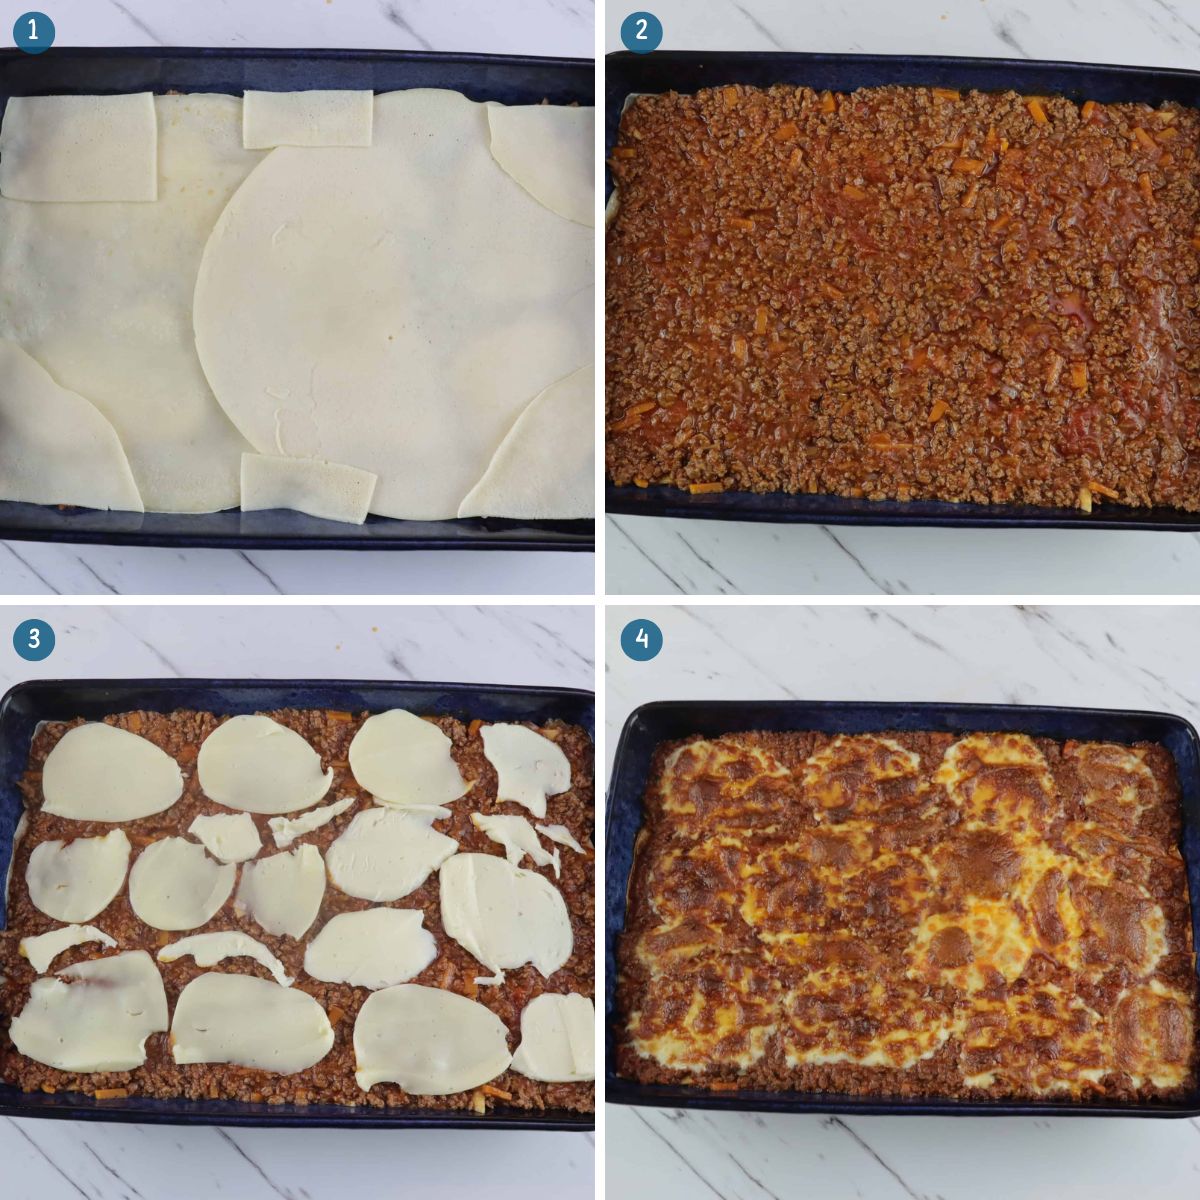 the-final-step-to-assemble-the-pancake-lasagna